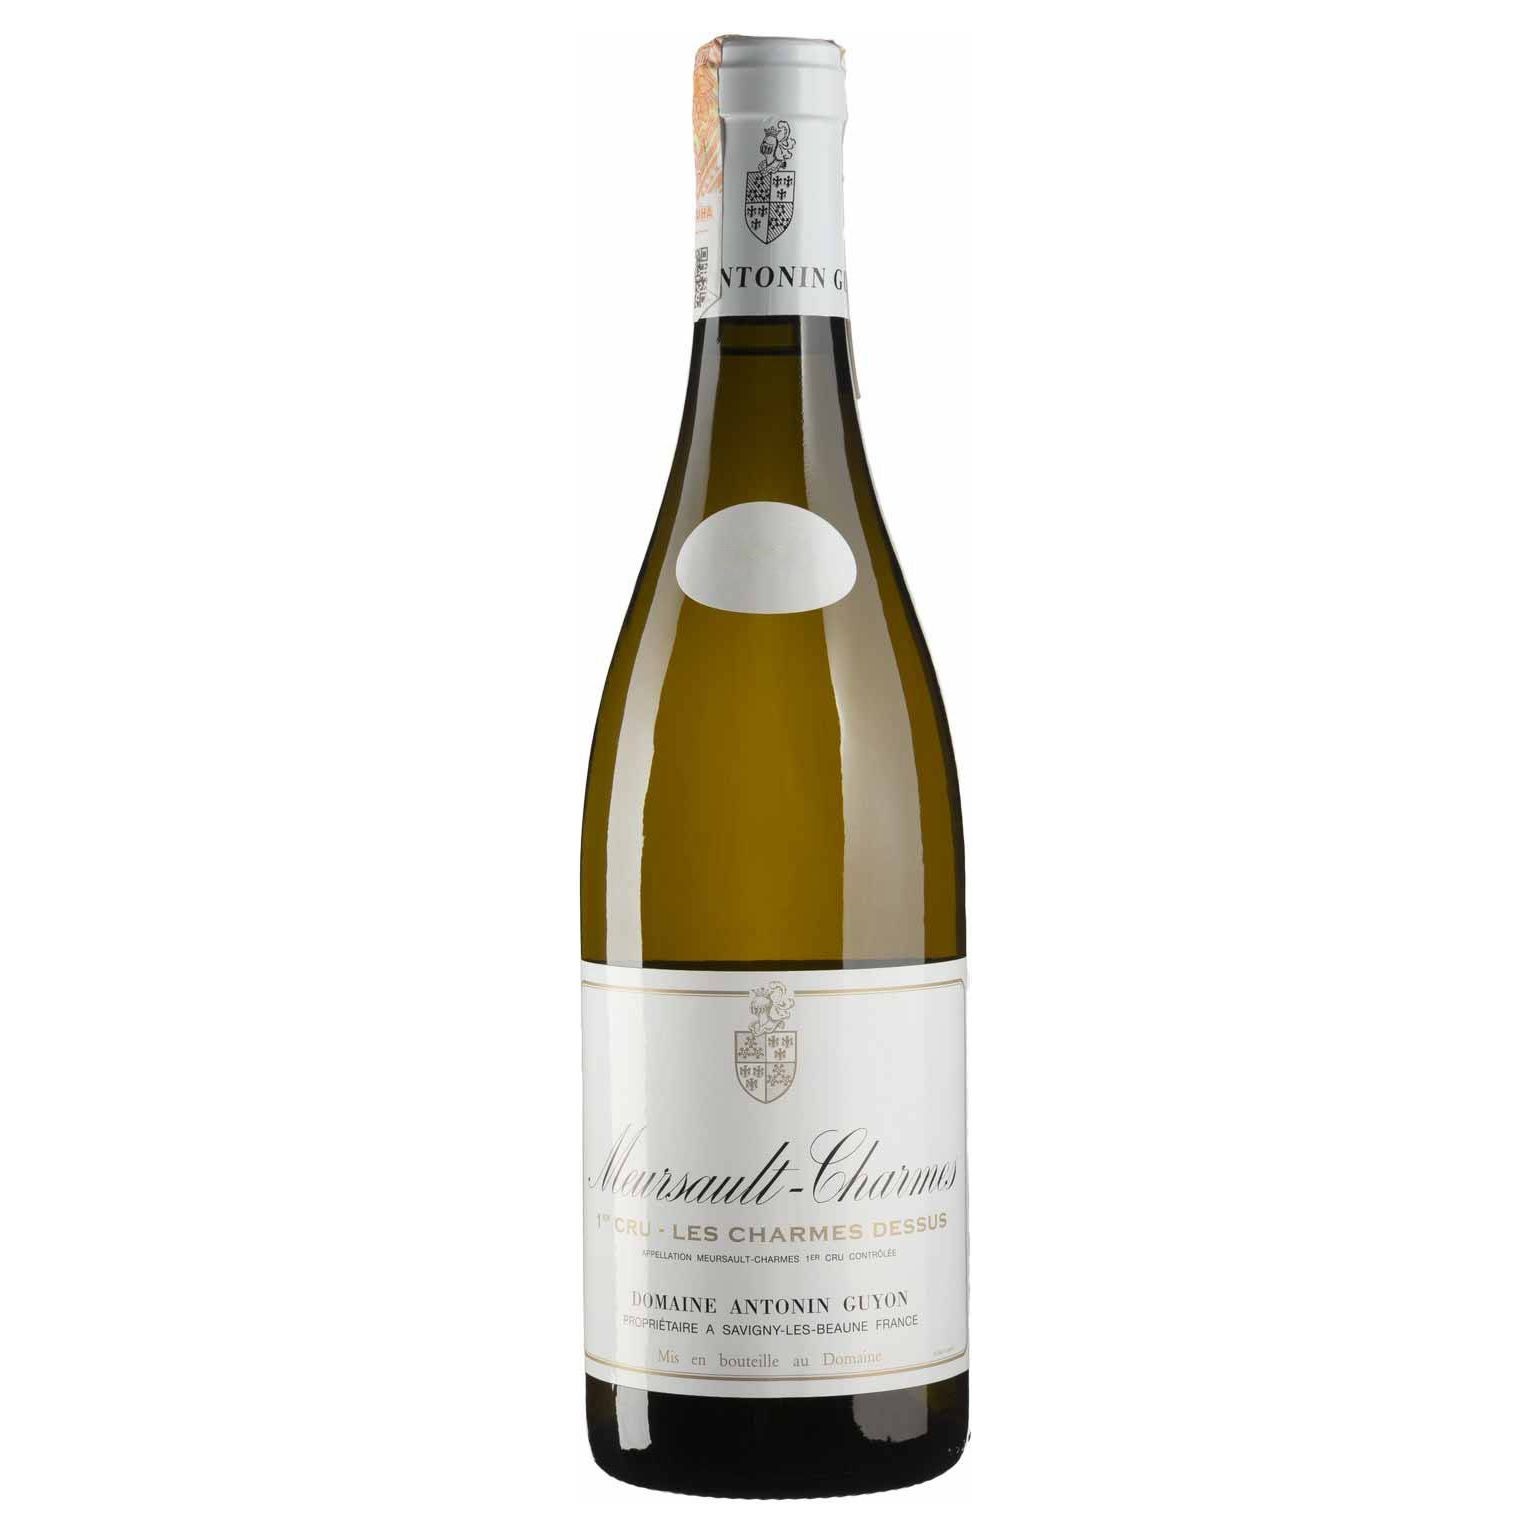 Вино Antonin Guyon Meursault-Charmes Les Charmes Dessus 2020, біле, сухе, 0,75 л (W7962) - фото 1